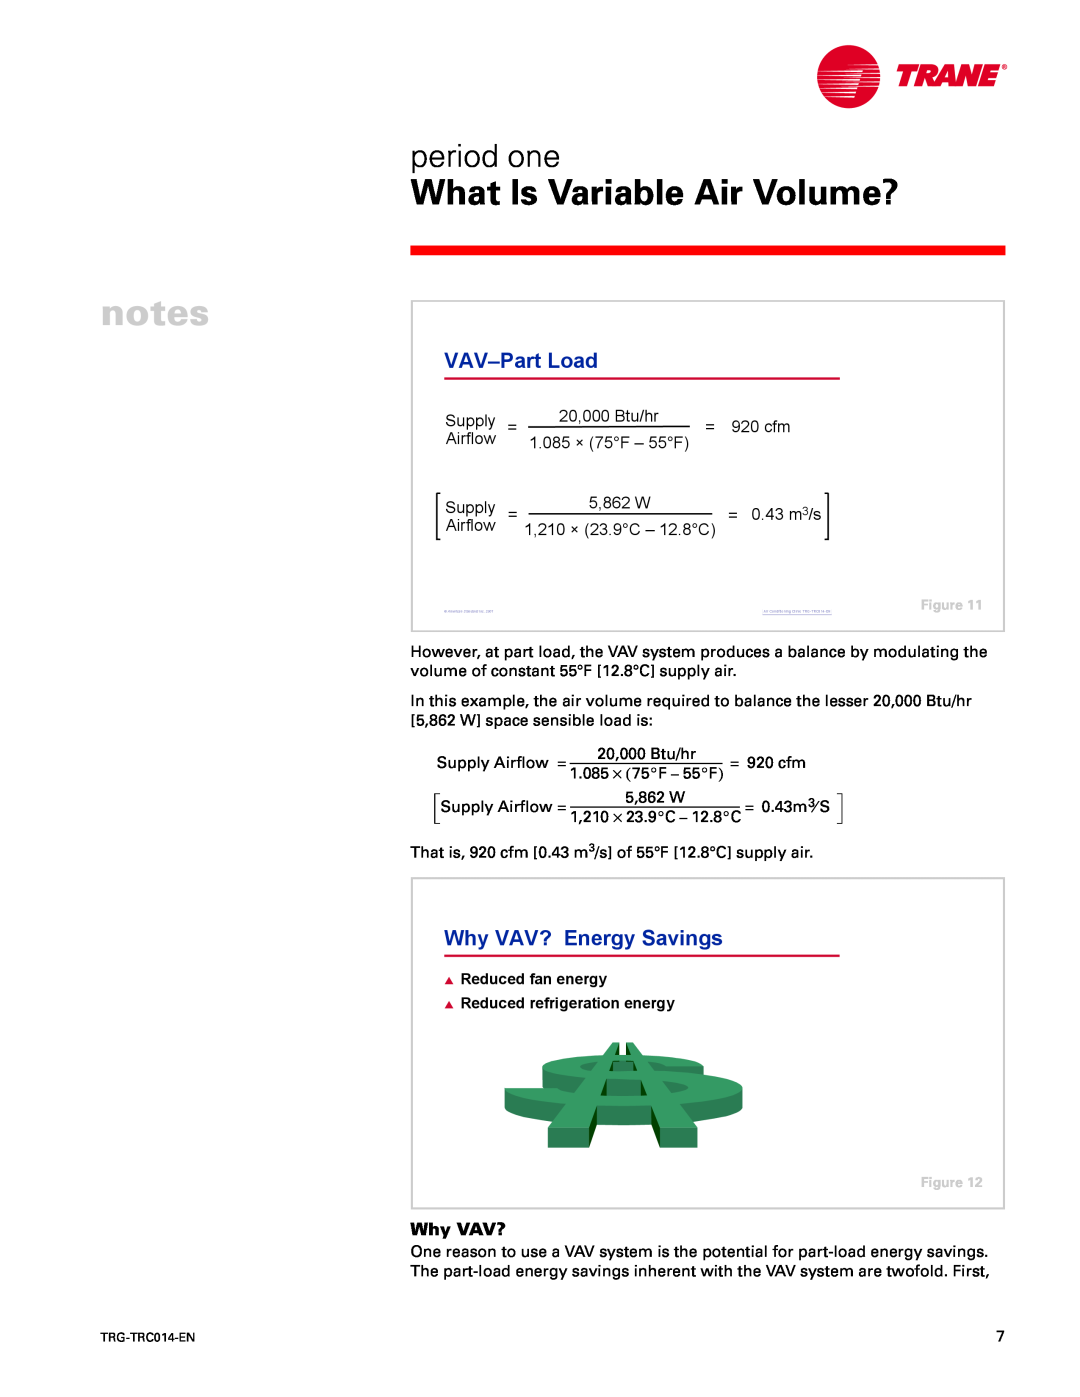 Trane TRG-TRC014-EN manual VAV-PartLoad, Why VAV? Energy Savings, What Is Variable Air Volume?, period one 